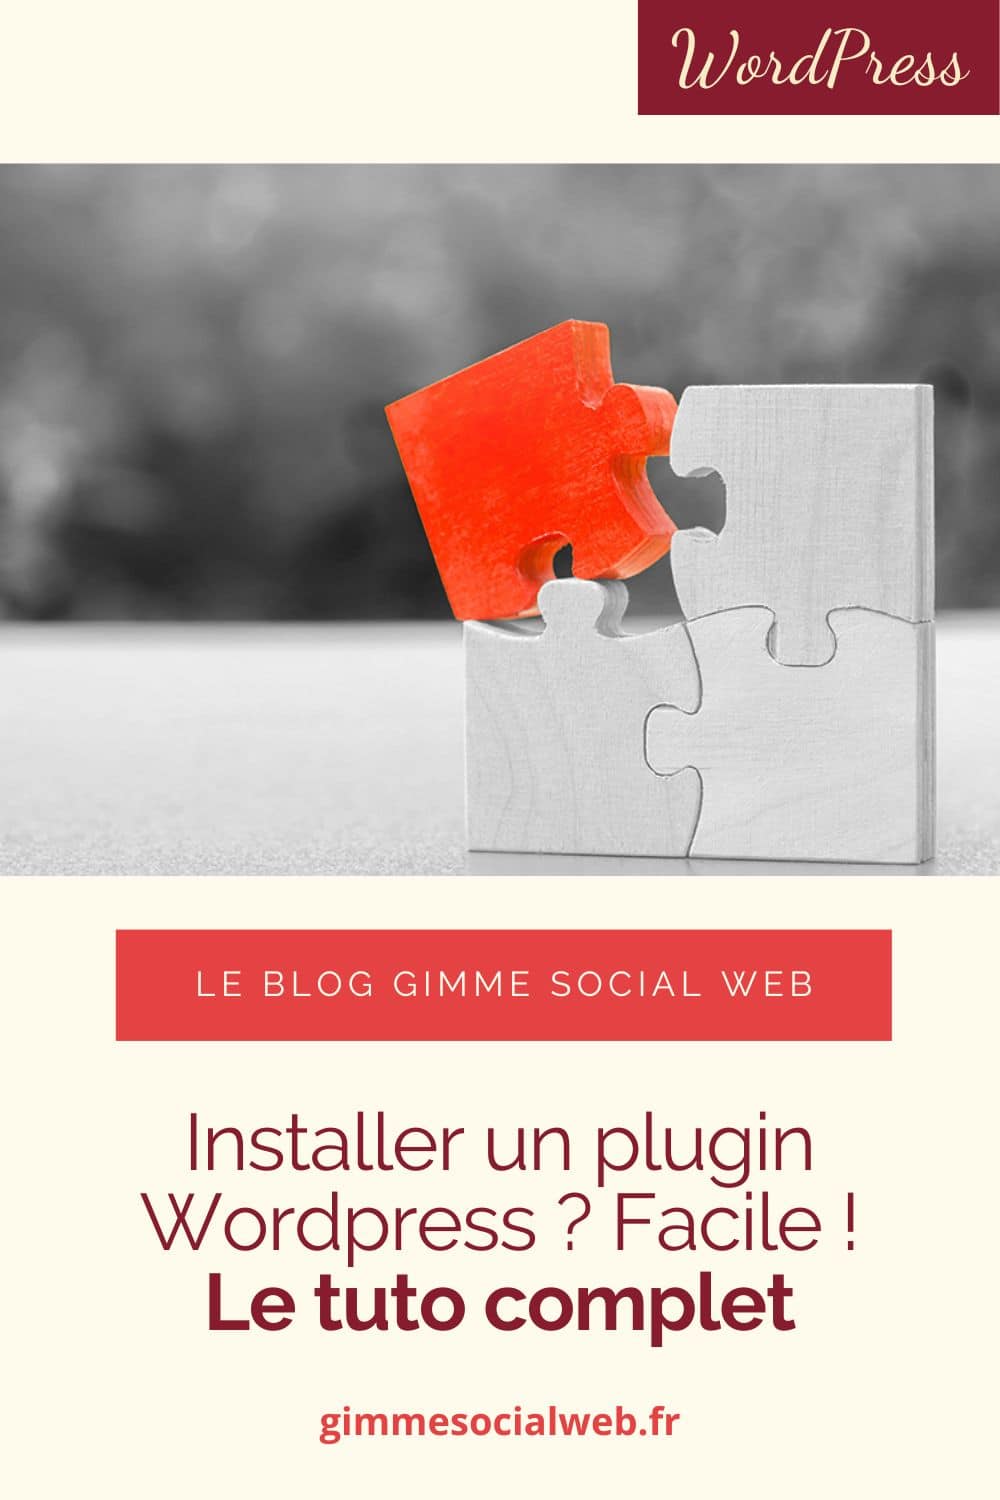 Epingle Pinterest Gimme Social Web - installer un plugin WordPress